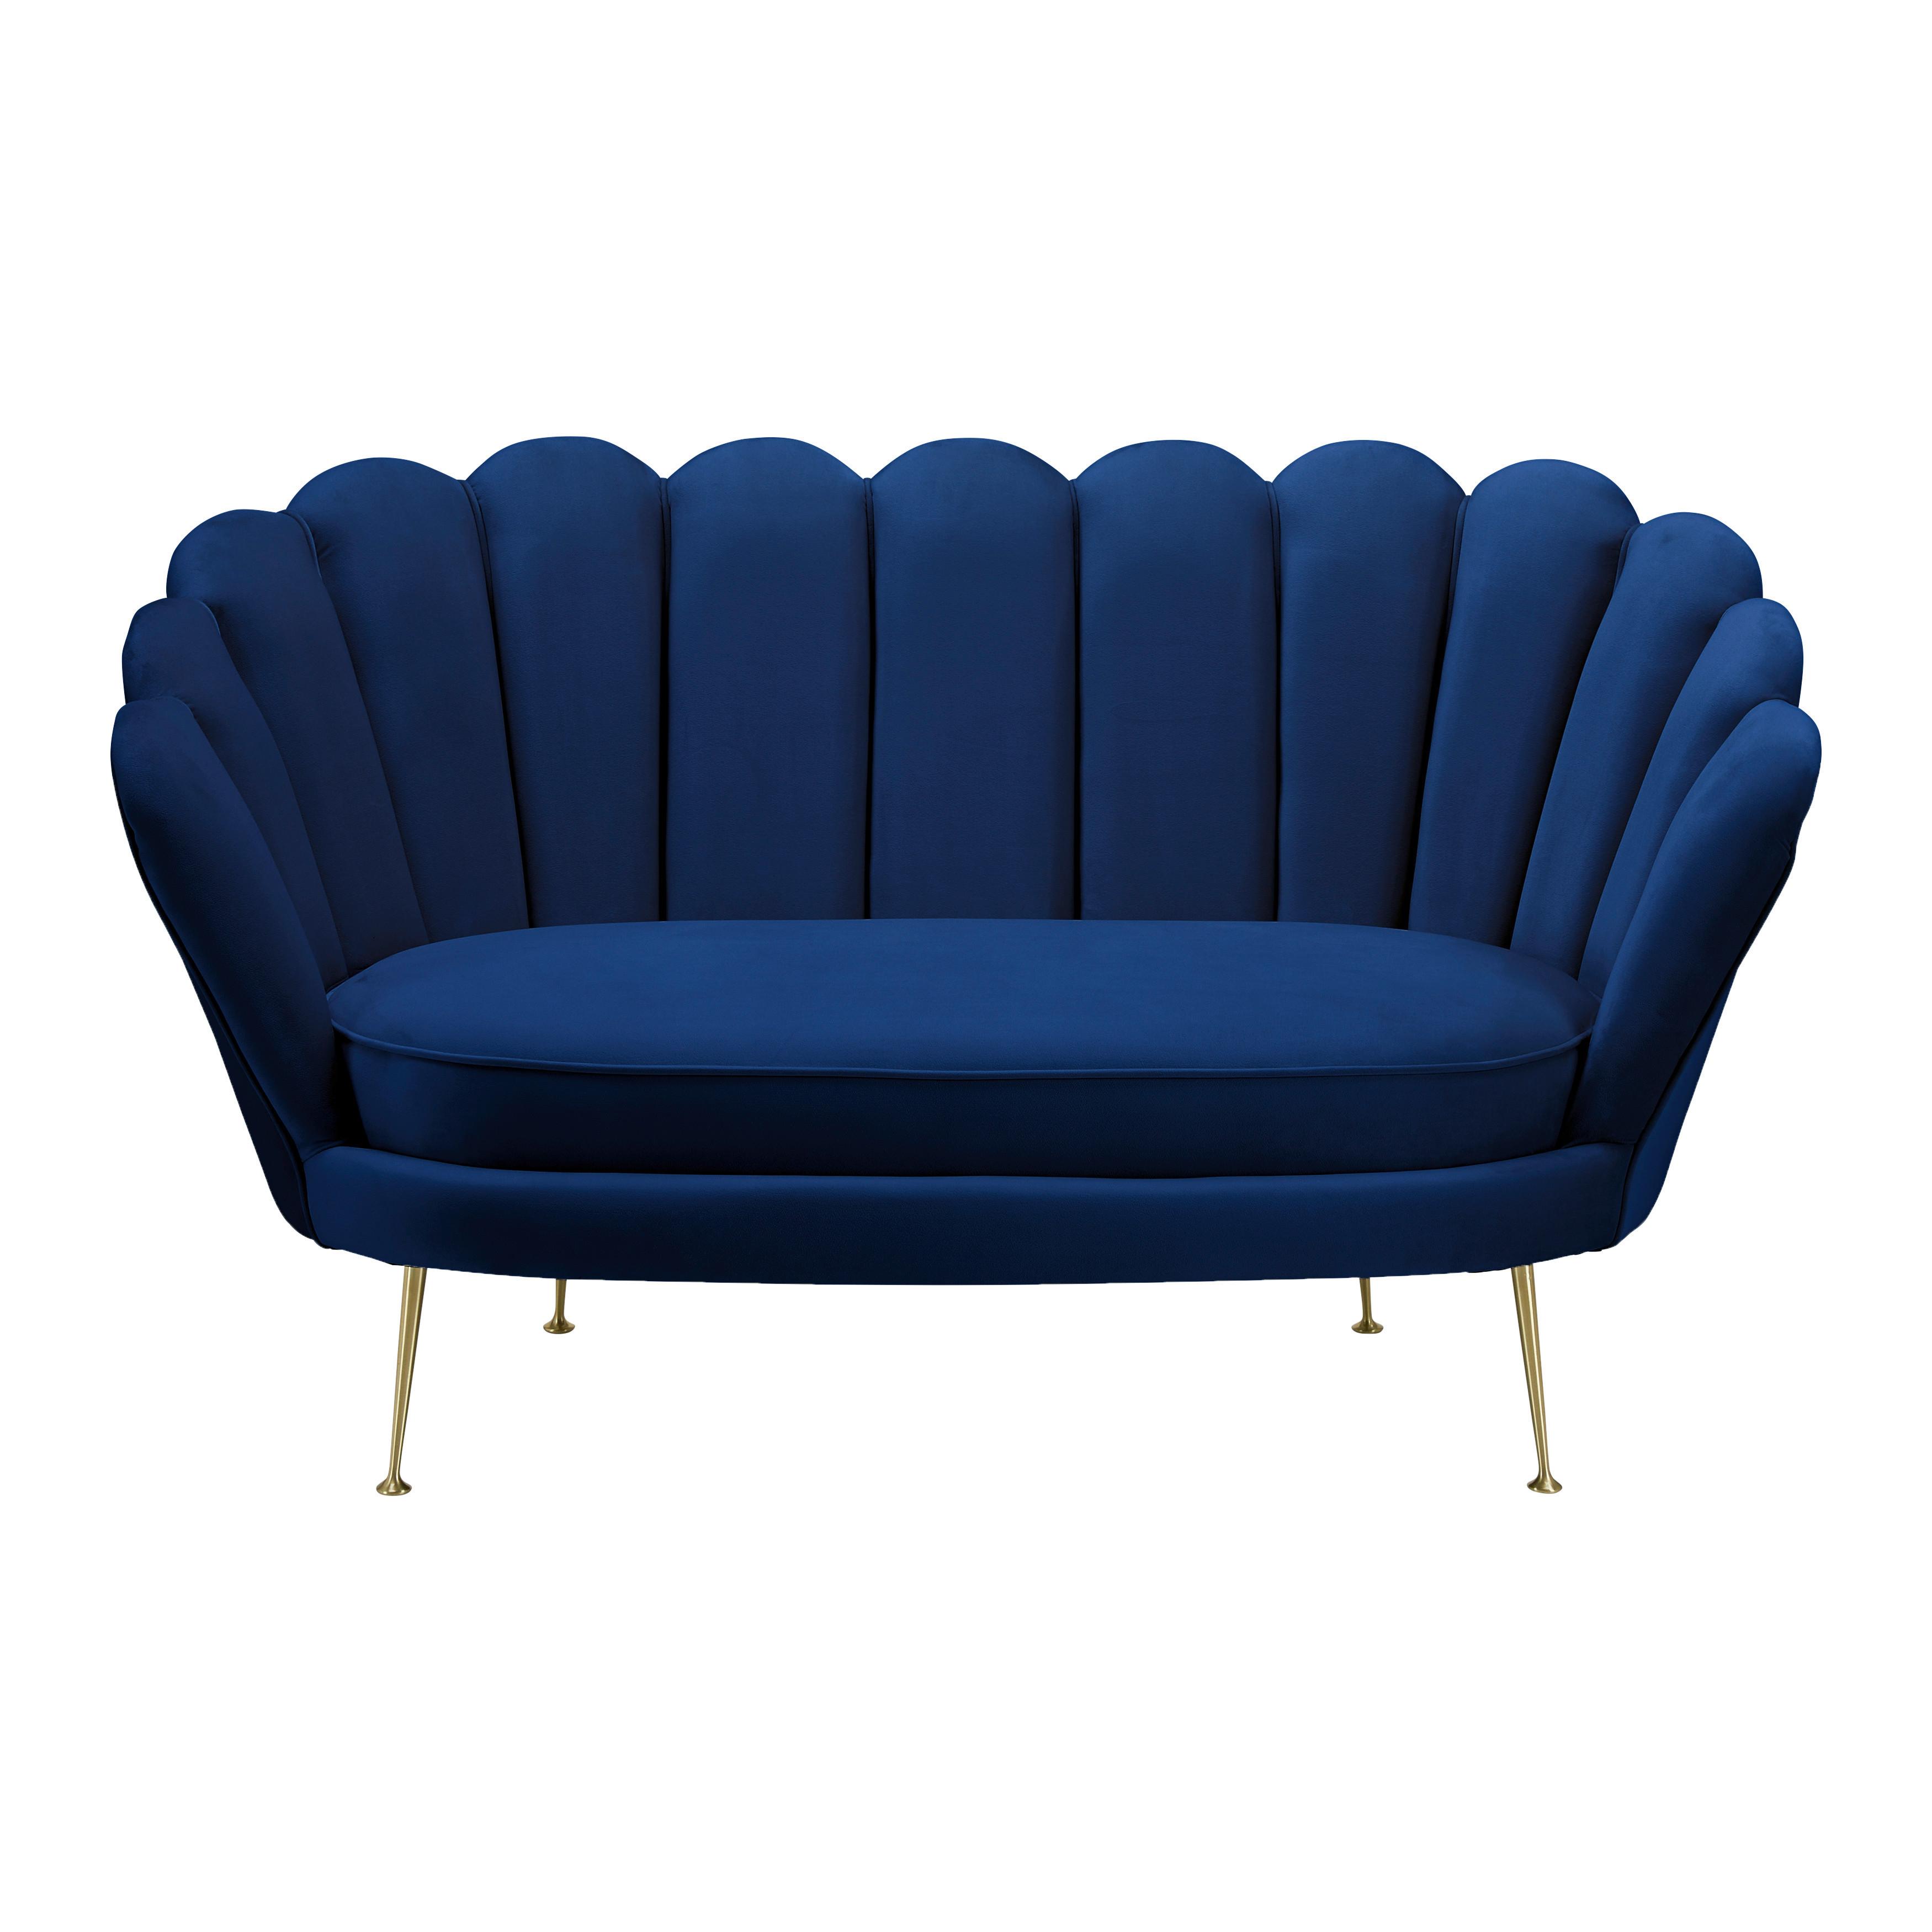 Sofa dunkelblau,"Jellina" Samt - Champagner/Goldfarben, MODERN, Holz/Textil (144/80/84cm) - Bessagi Home